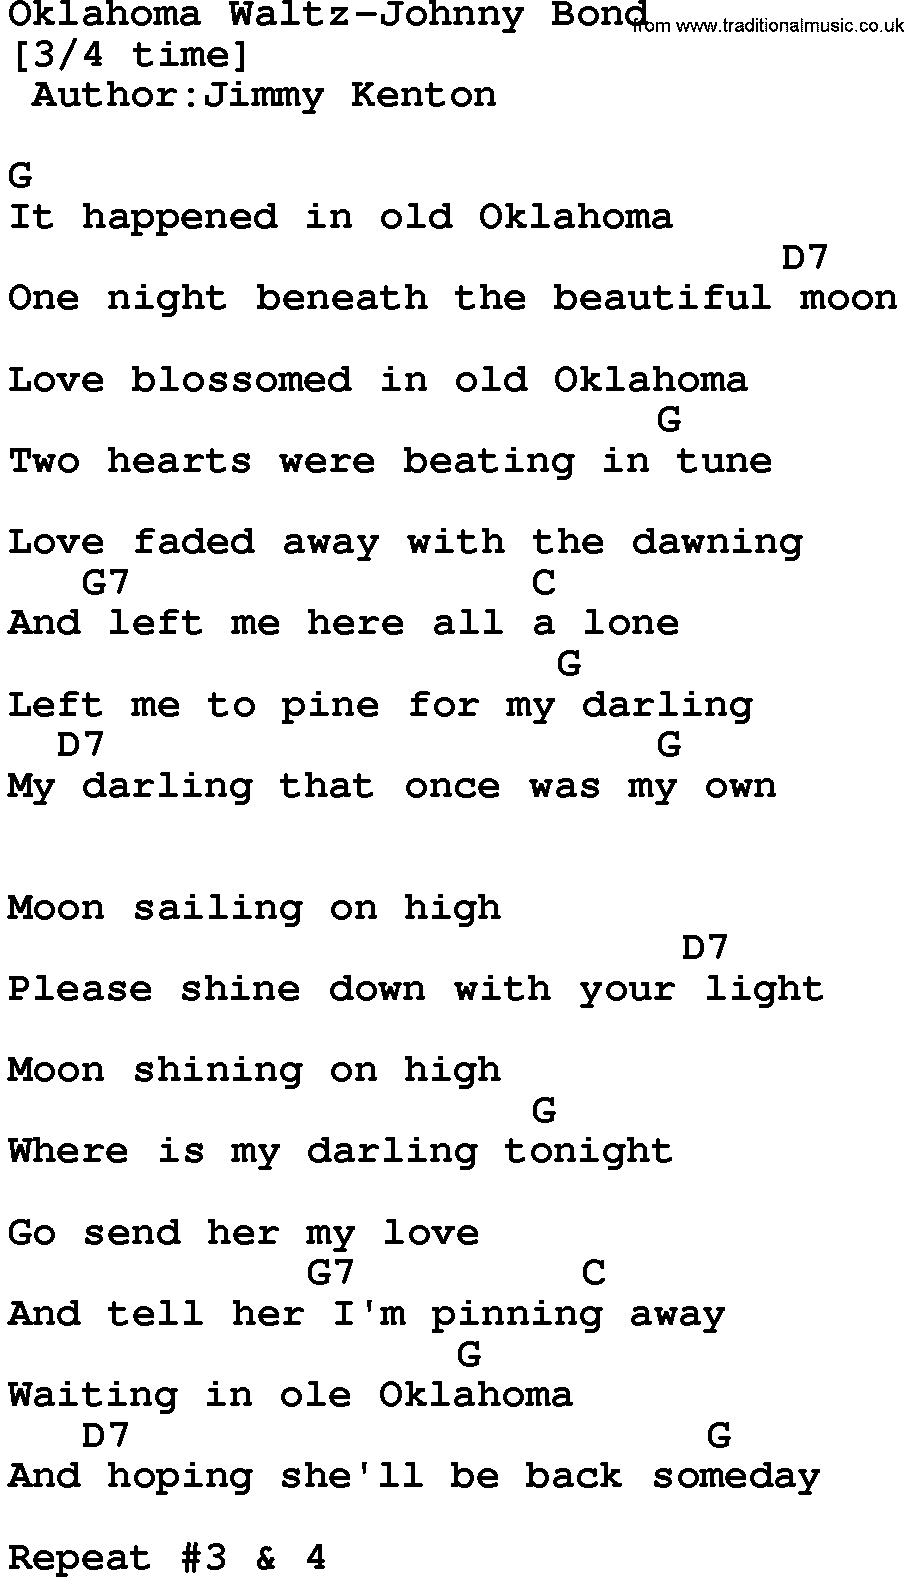 Country music song: Oklahoma Waltz-Johnny Bond lyrics and chords